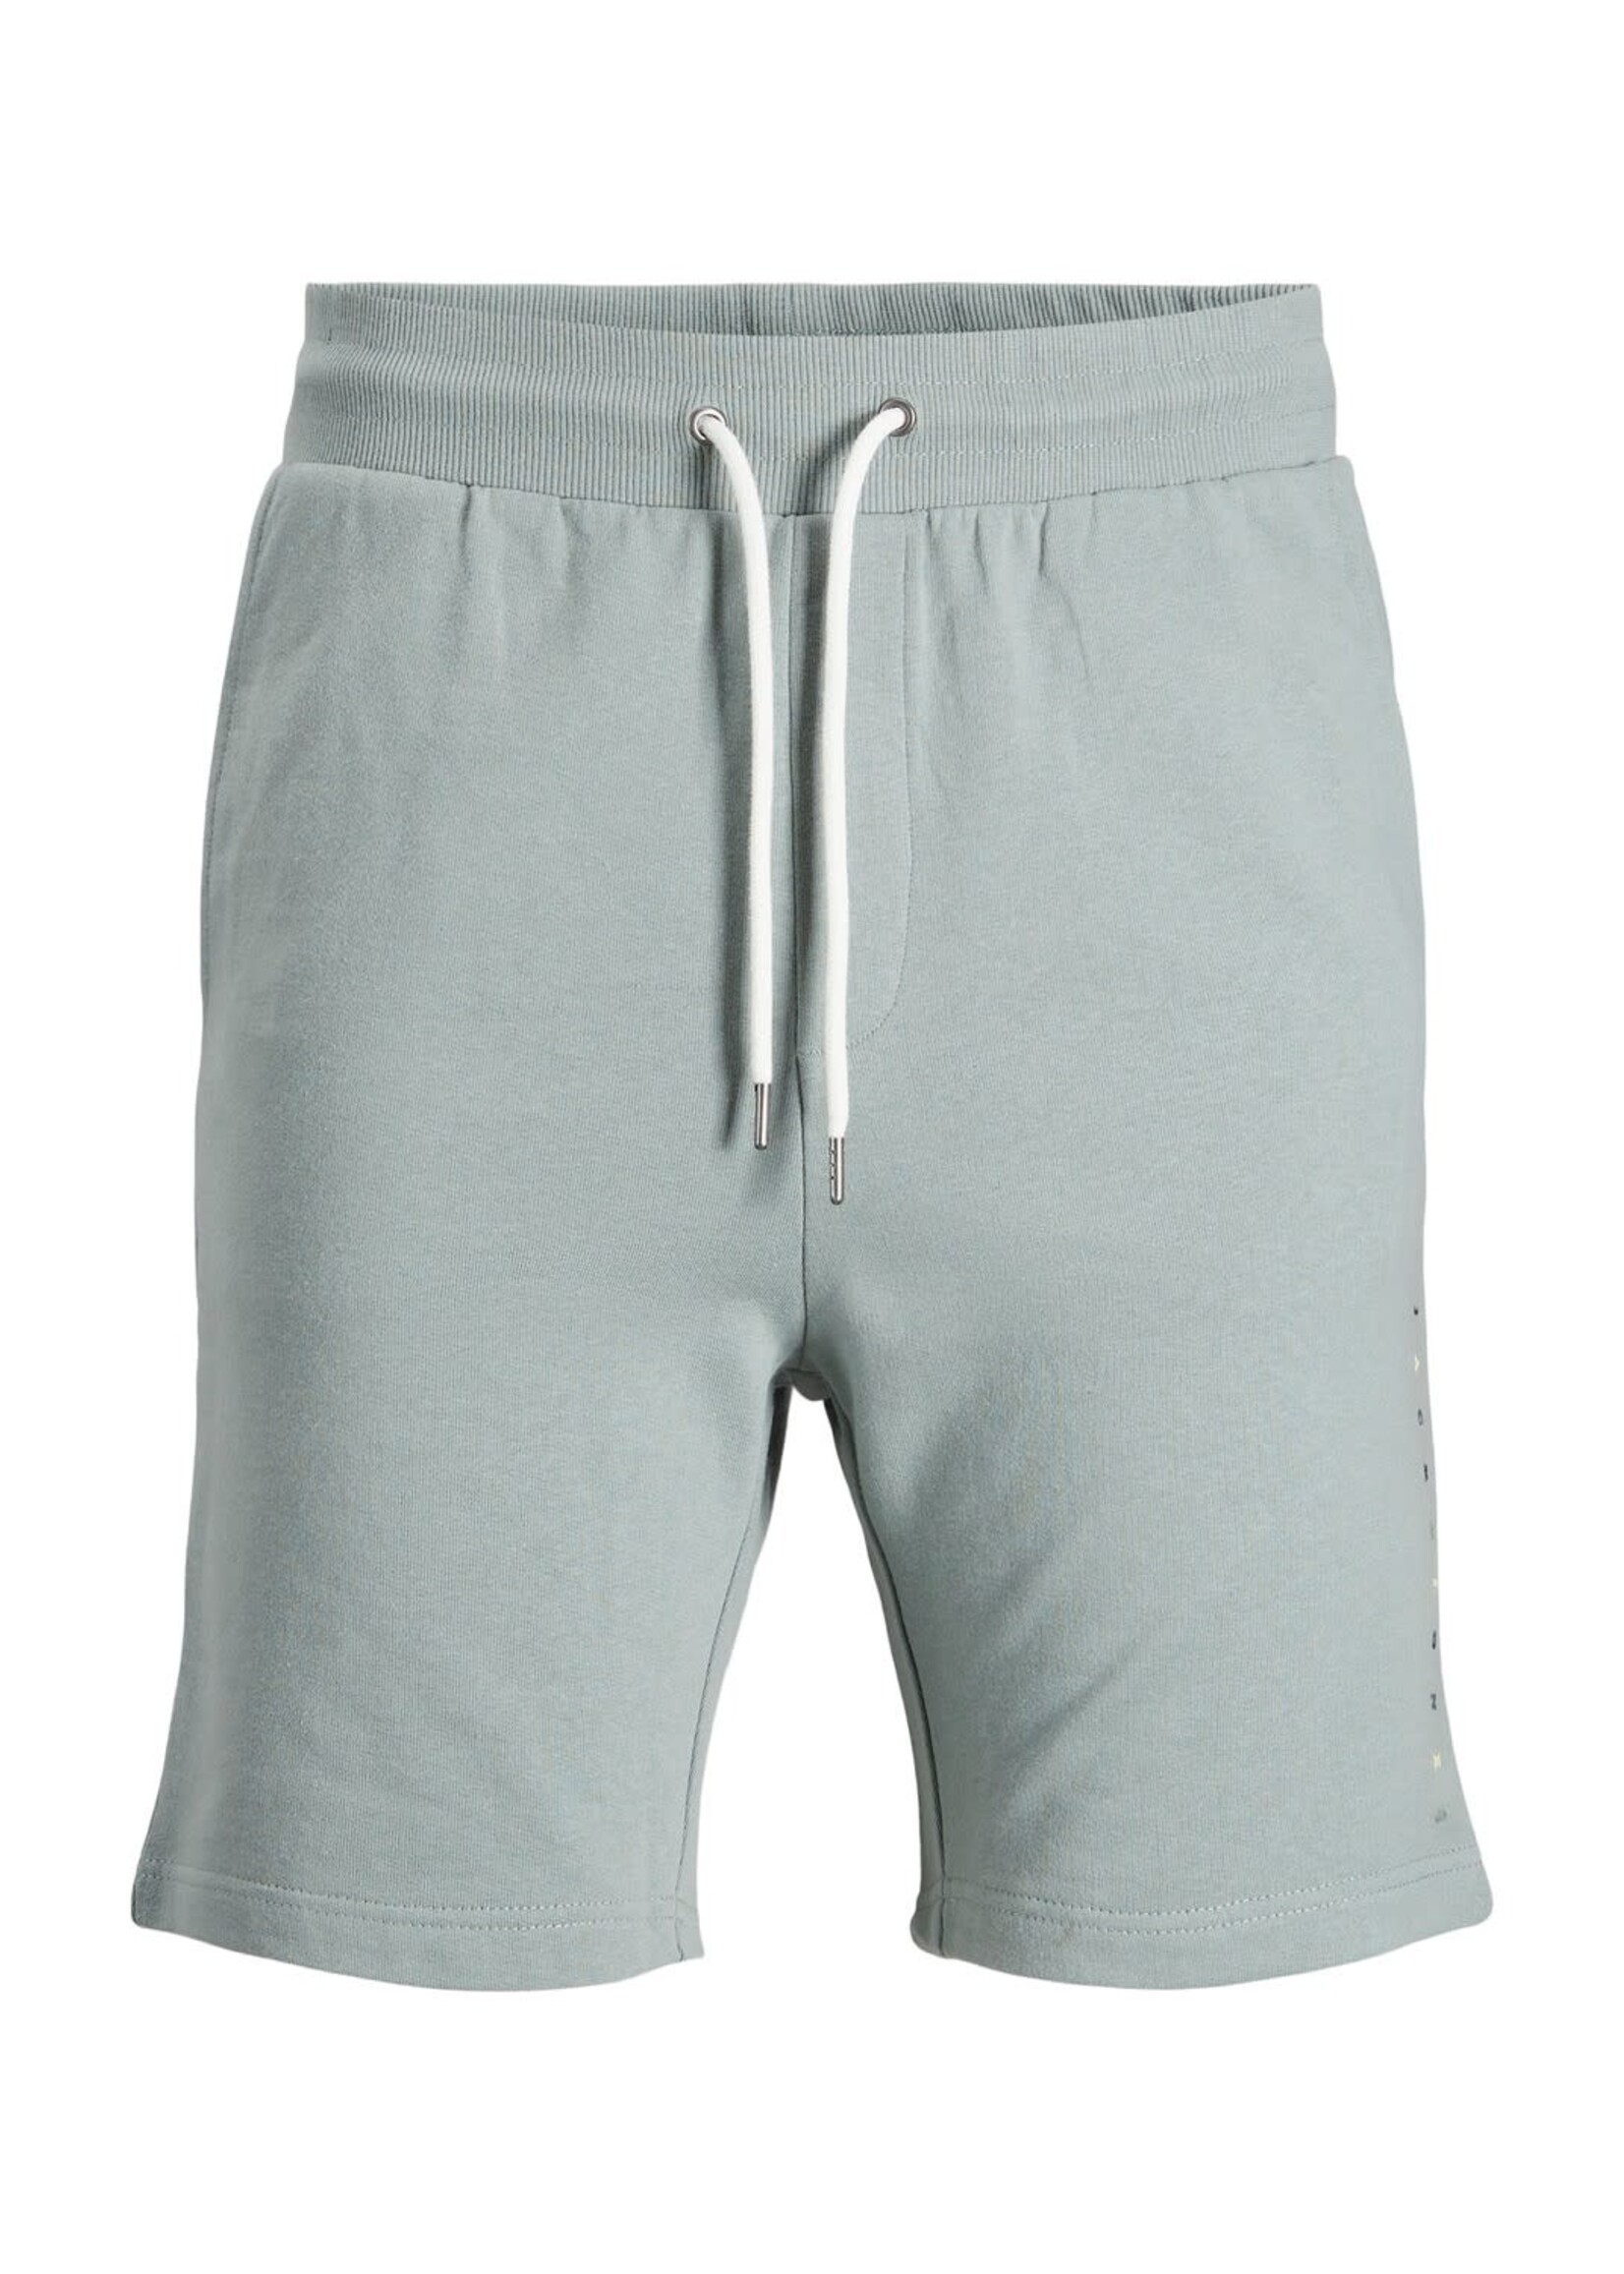 Font sweat shorts - Slate gray multi color